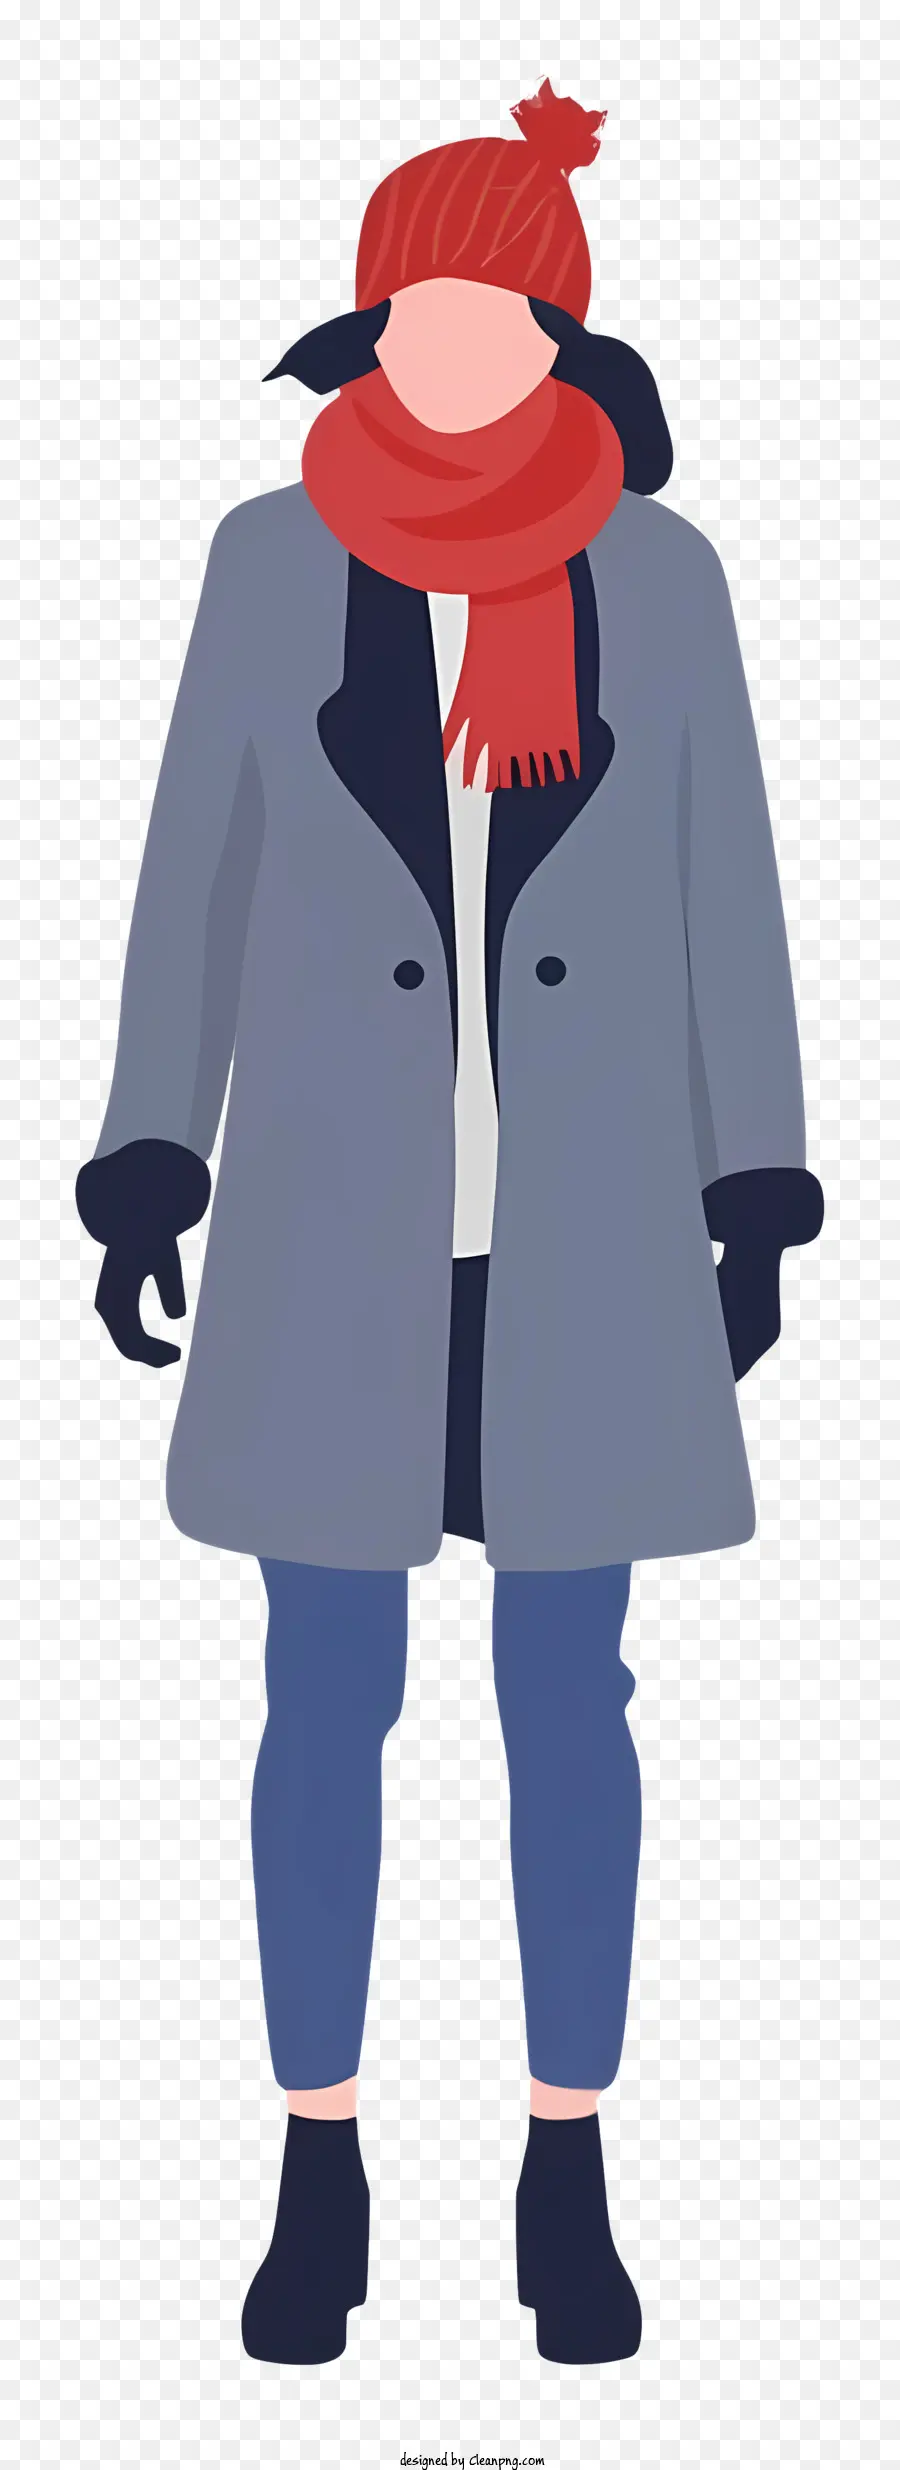 Modestil -Outfit Winter -Kleidungsmantel - Entschlossene Person in blauem Mantel mit roter Hut